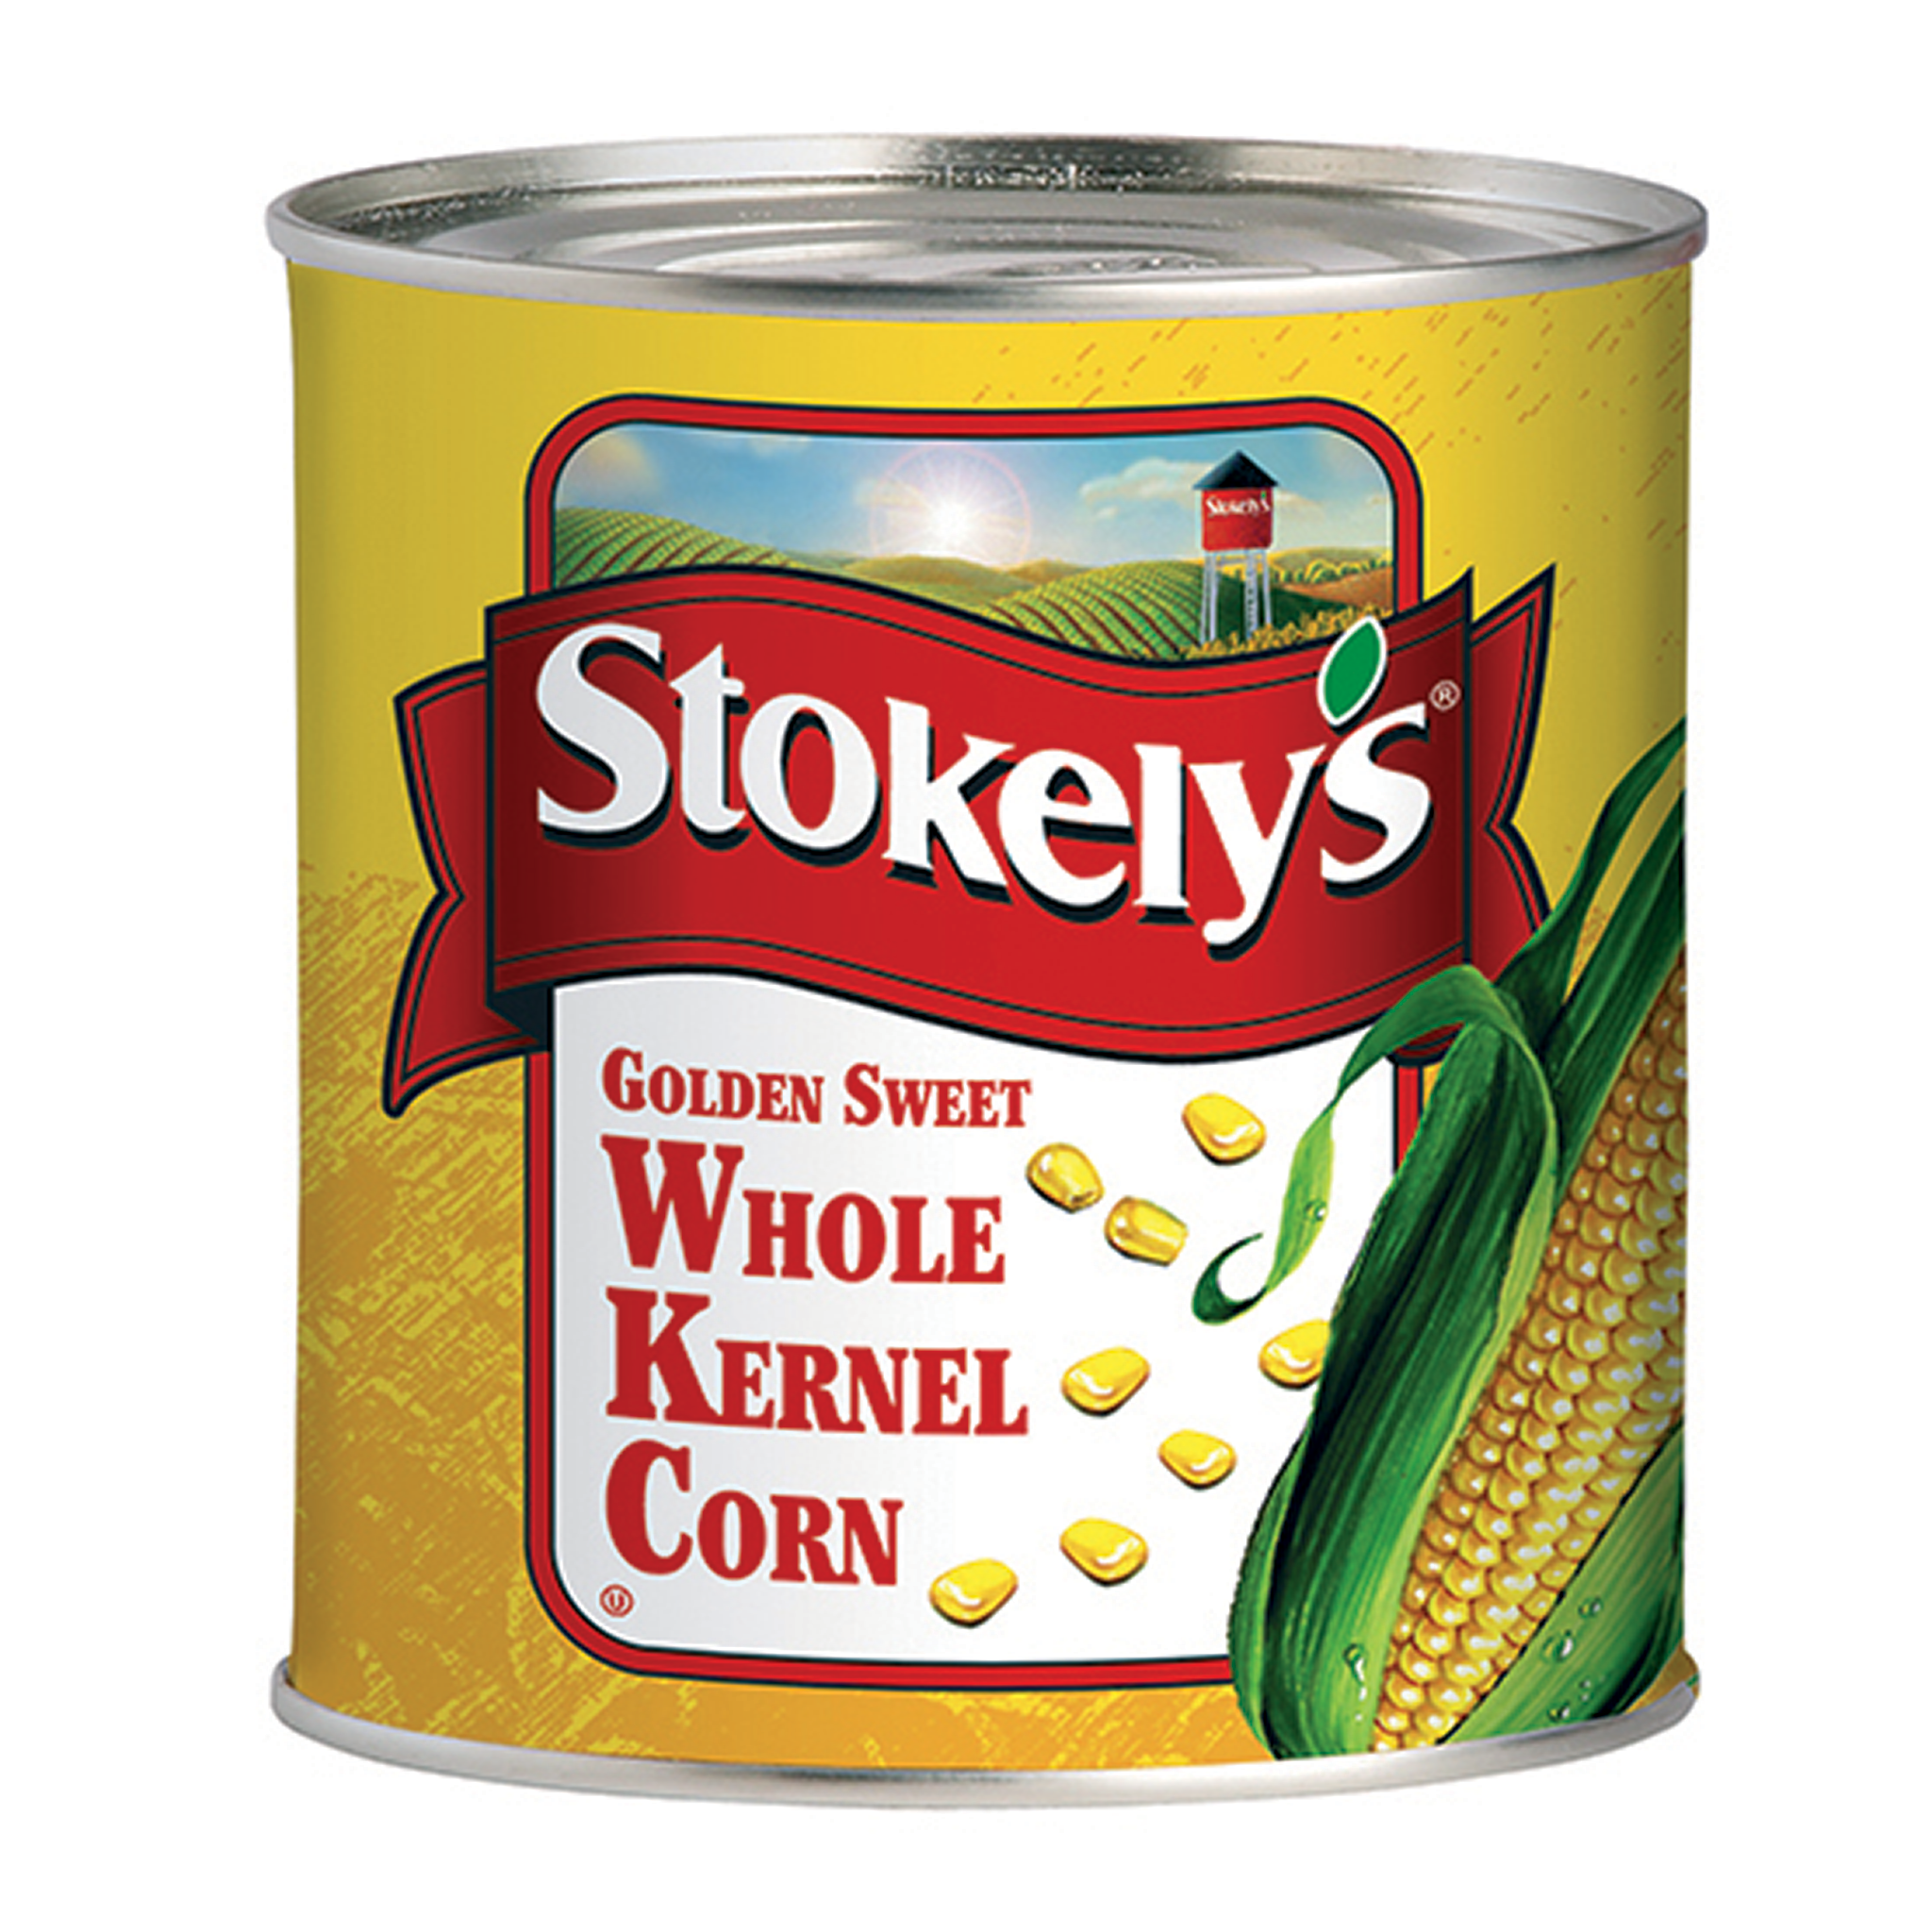 Sweetcorn Kernel Corn 340g by Stokely's